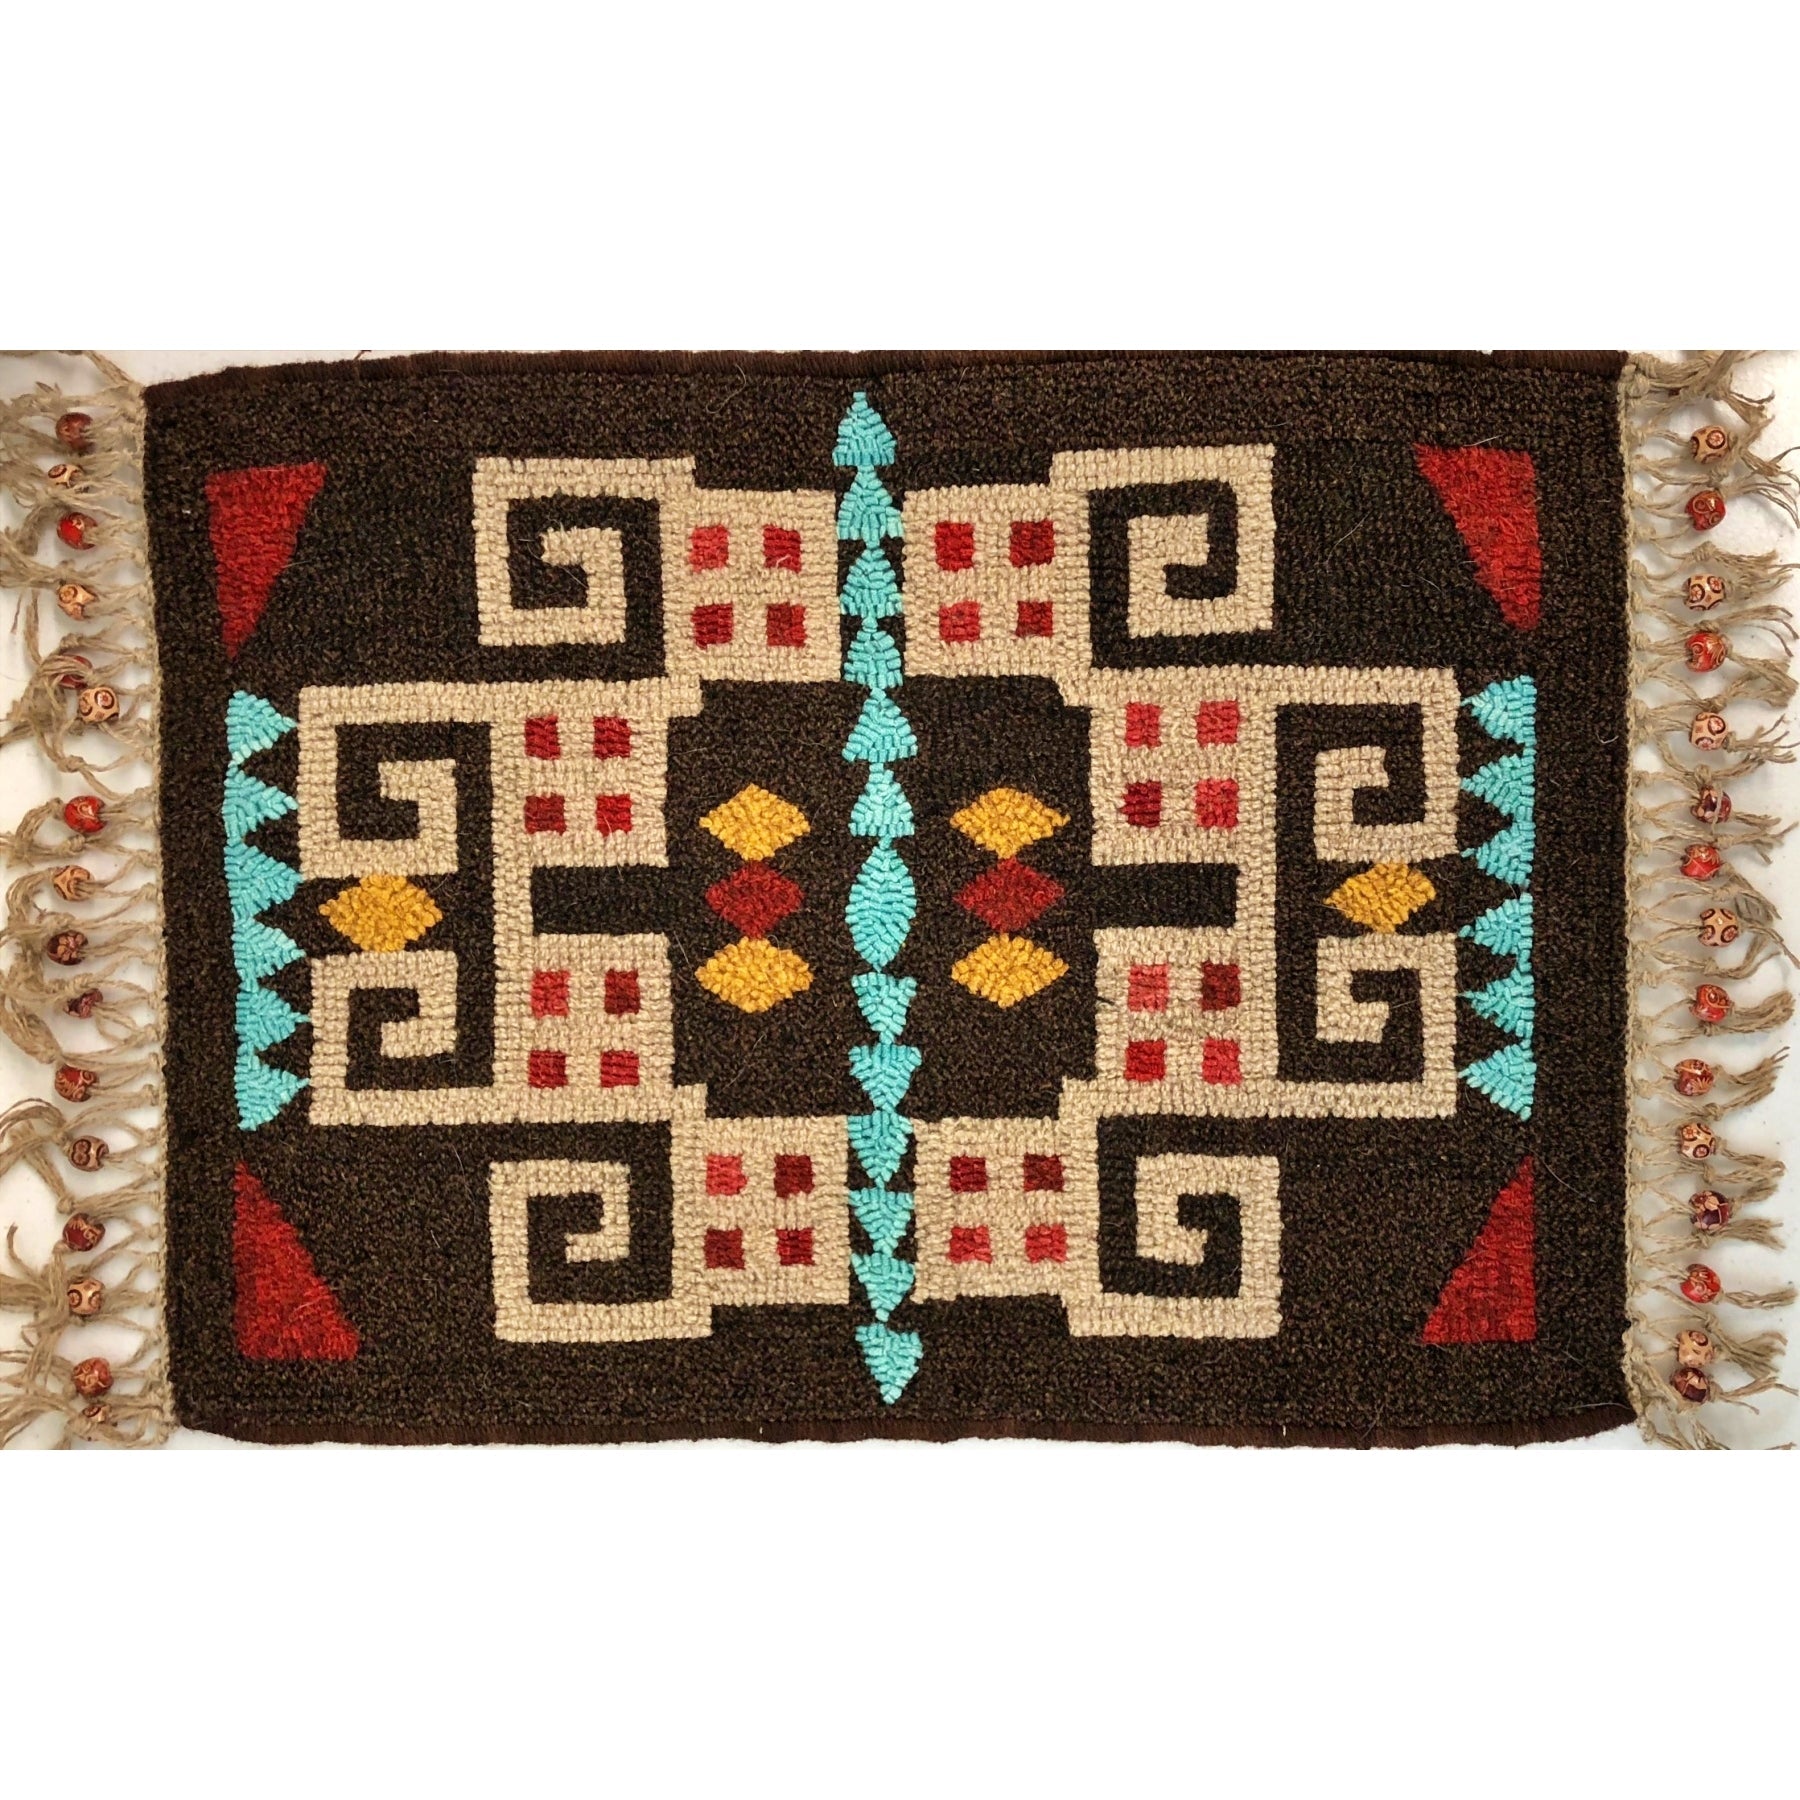 Umatilla, rug hooked by Katharine Webster